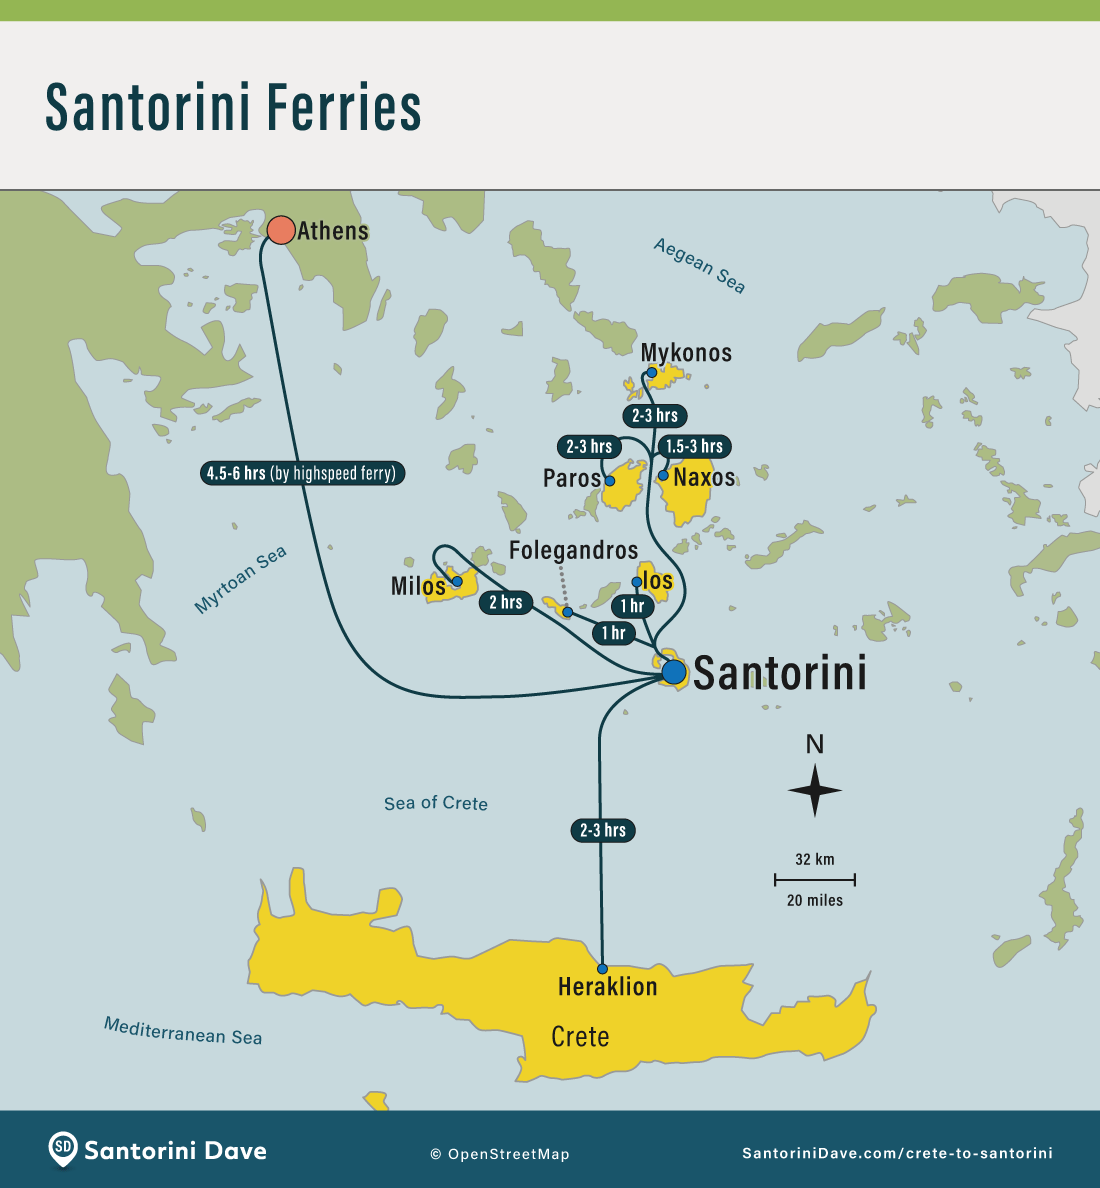 Crete to Santorini Ferry Times and Routes.